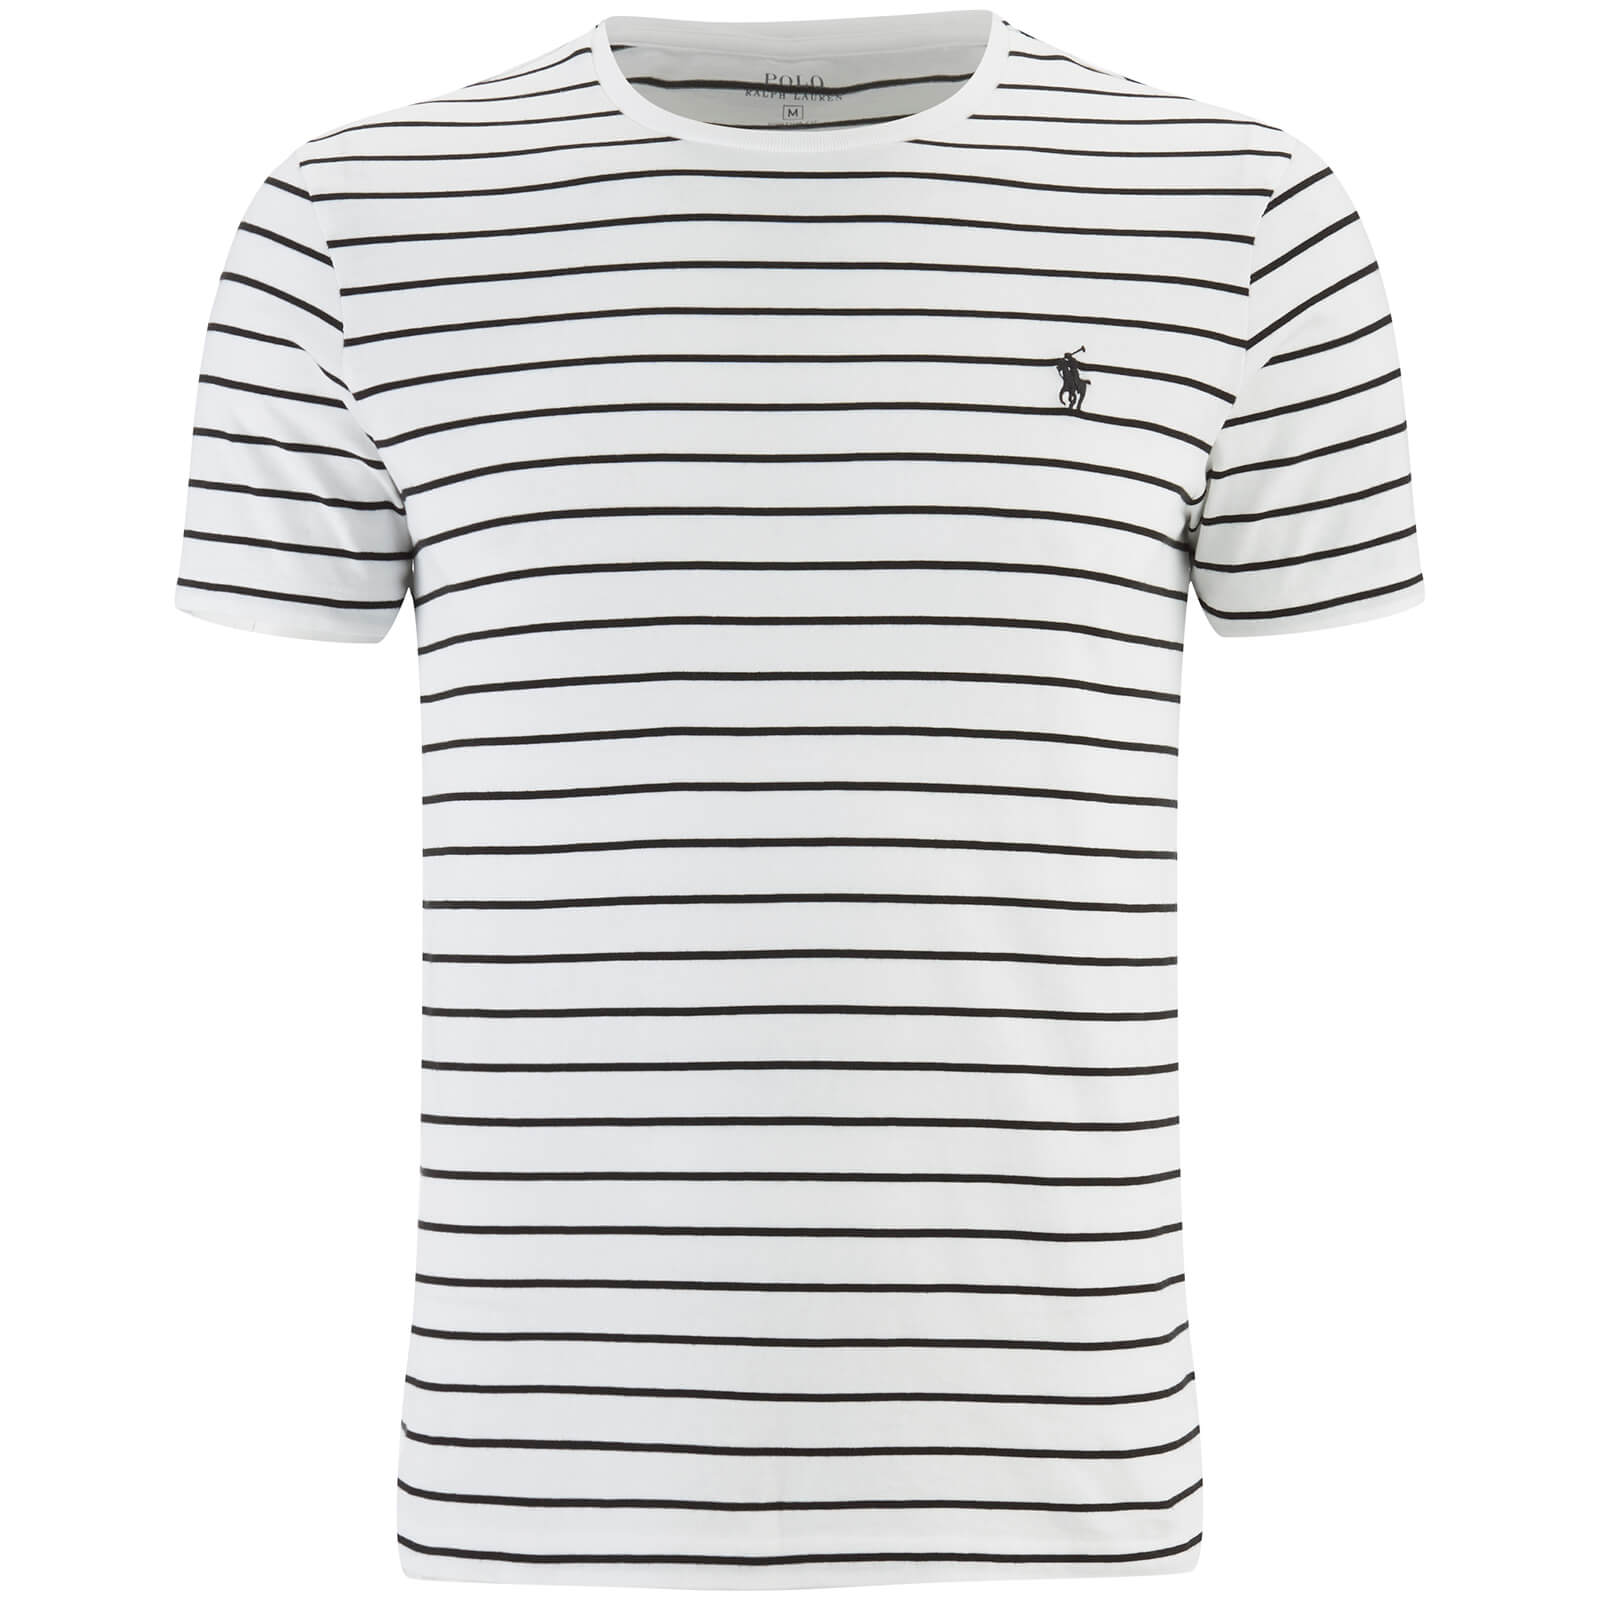 ralph lauren black and white striped t shirt